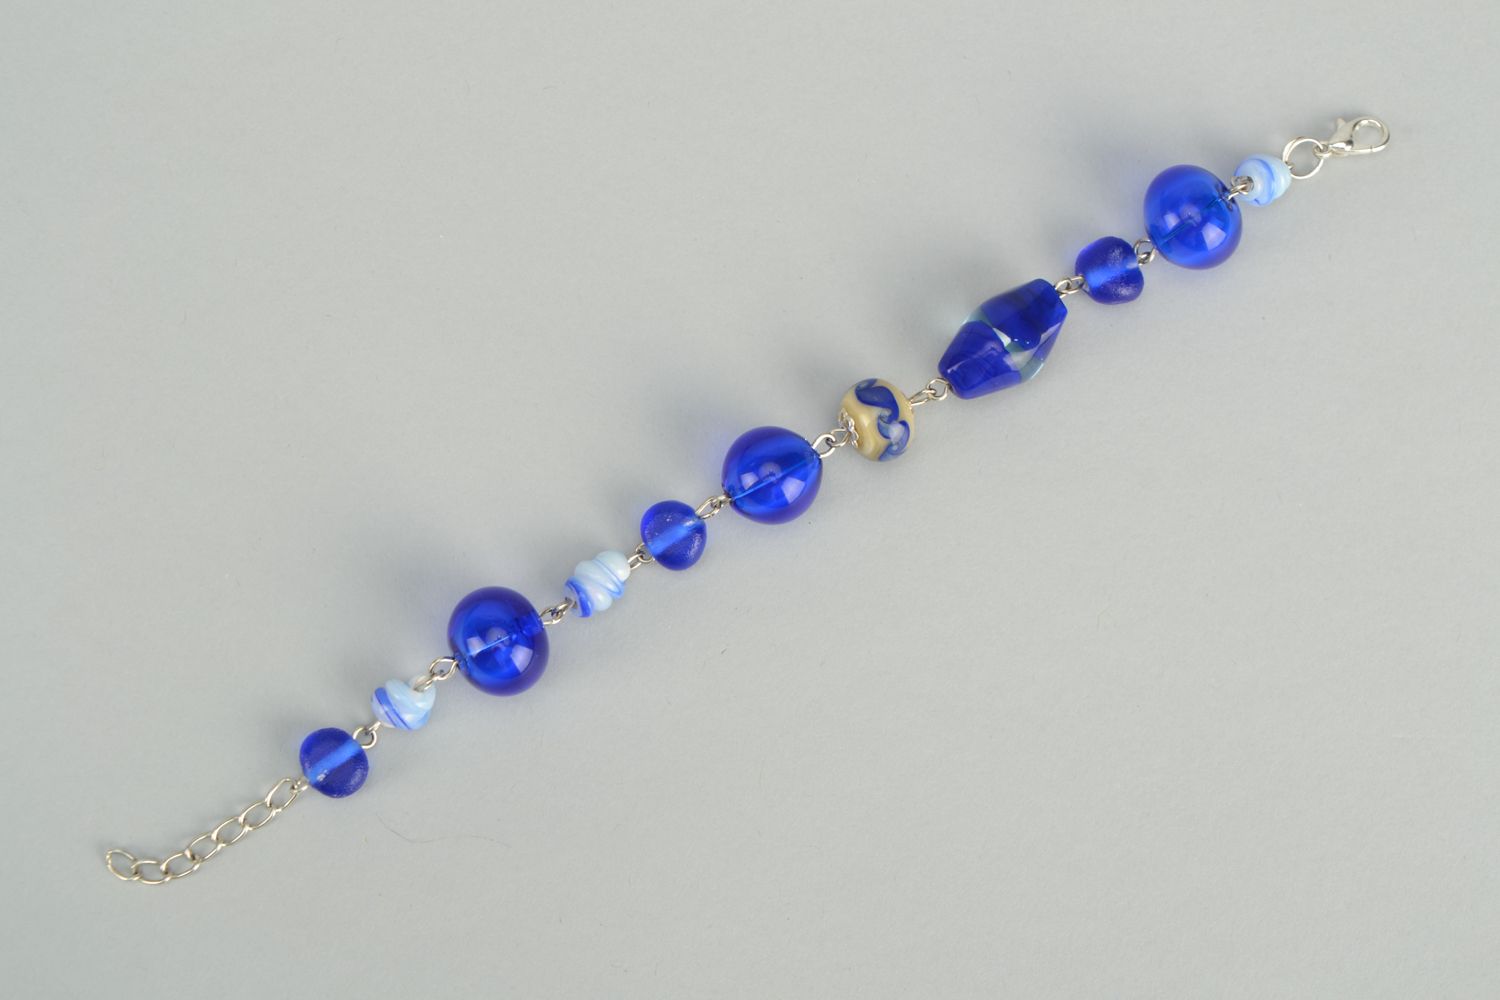 Interesting bracelet with blue lampwork glass beads photo 6